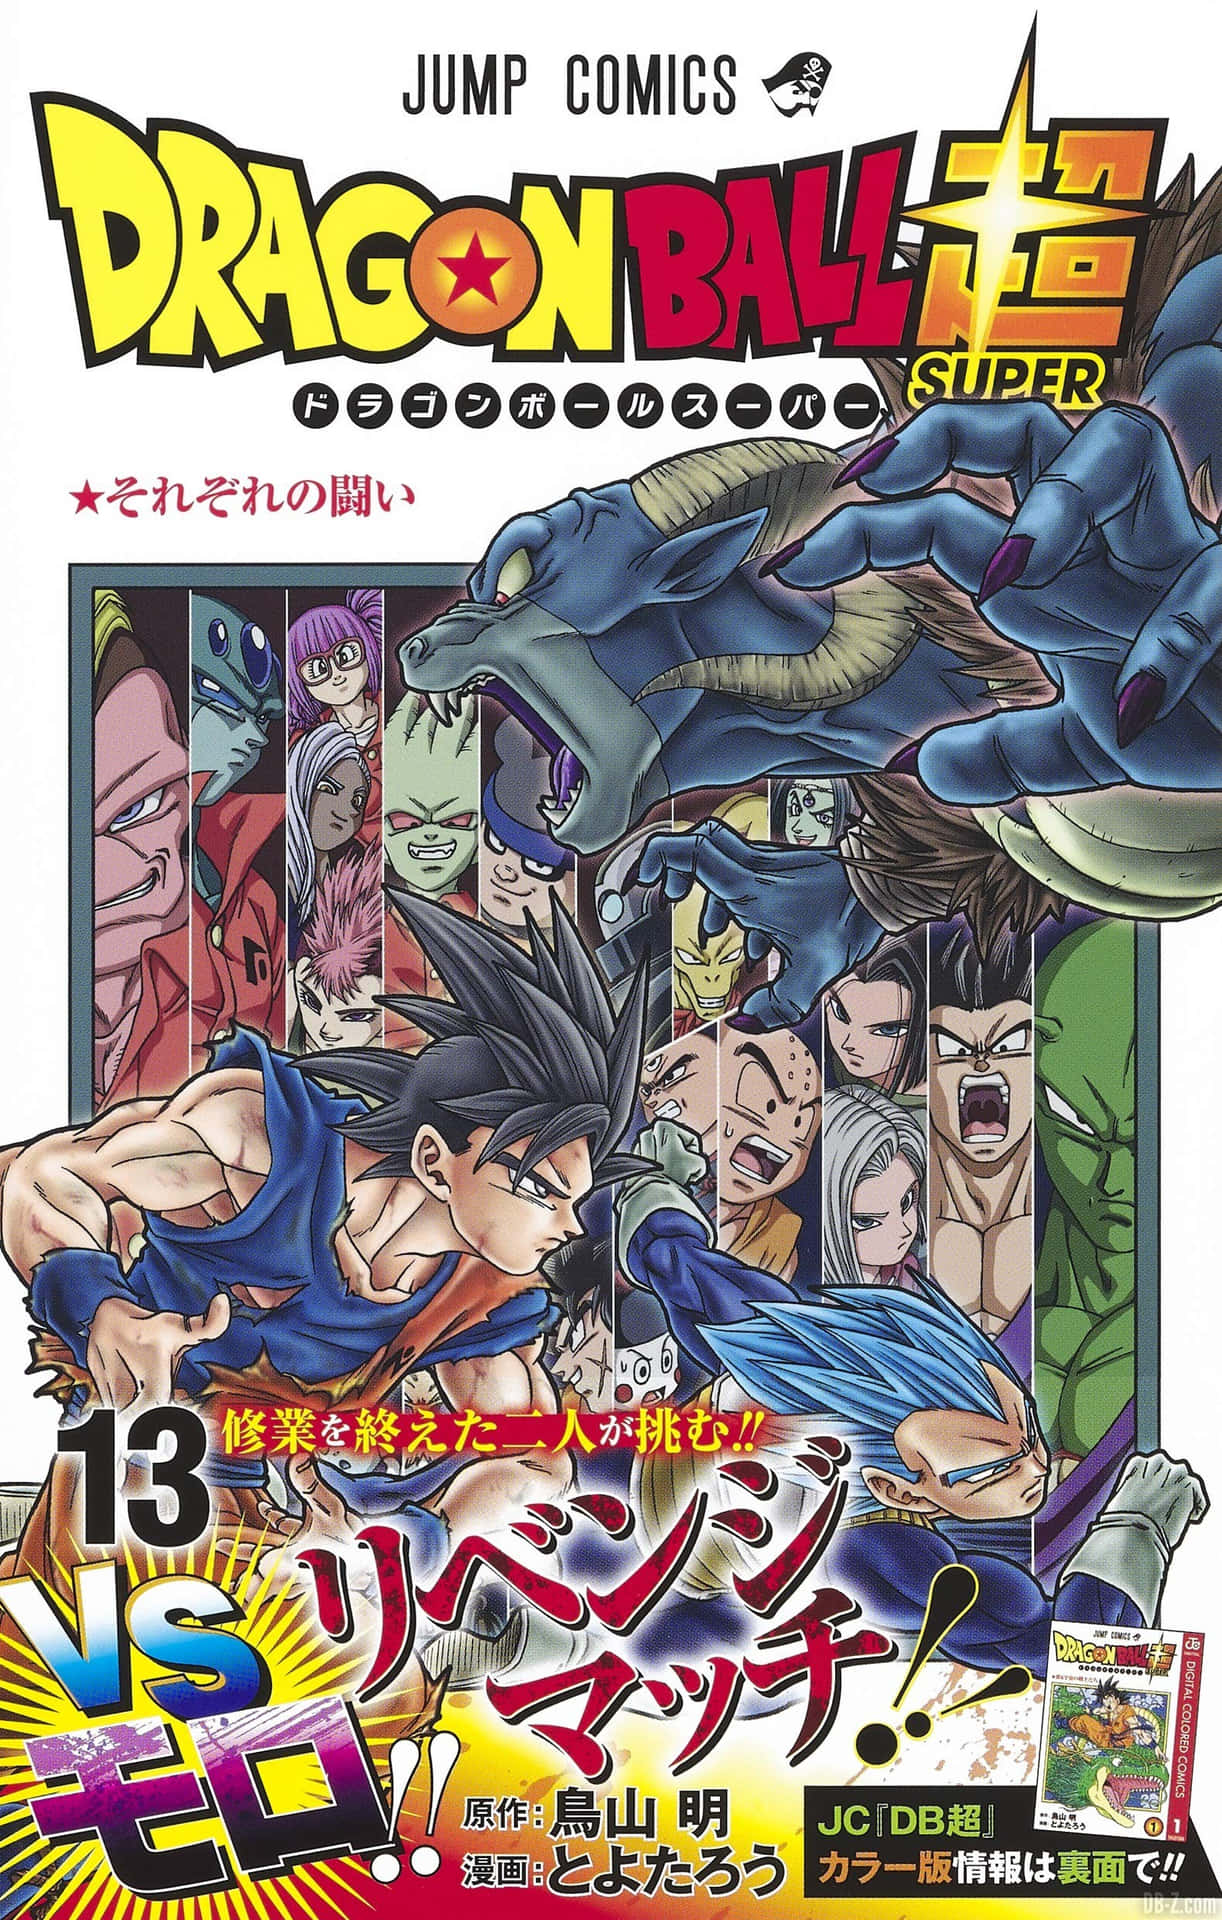 Goku and Vegeta take on a powerful enemy in the Dragon Ball Super Manga Wallpaper